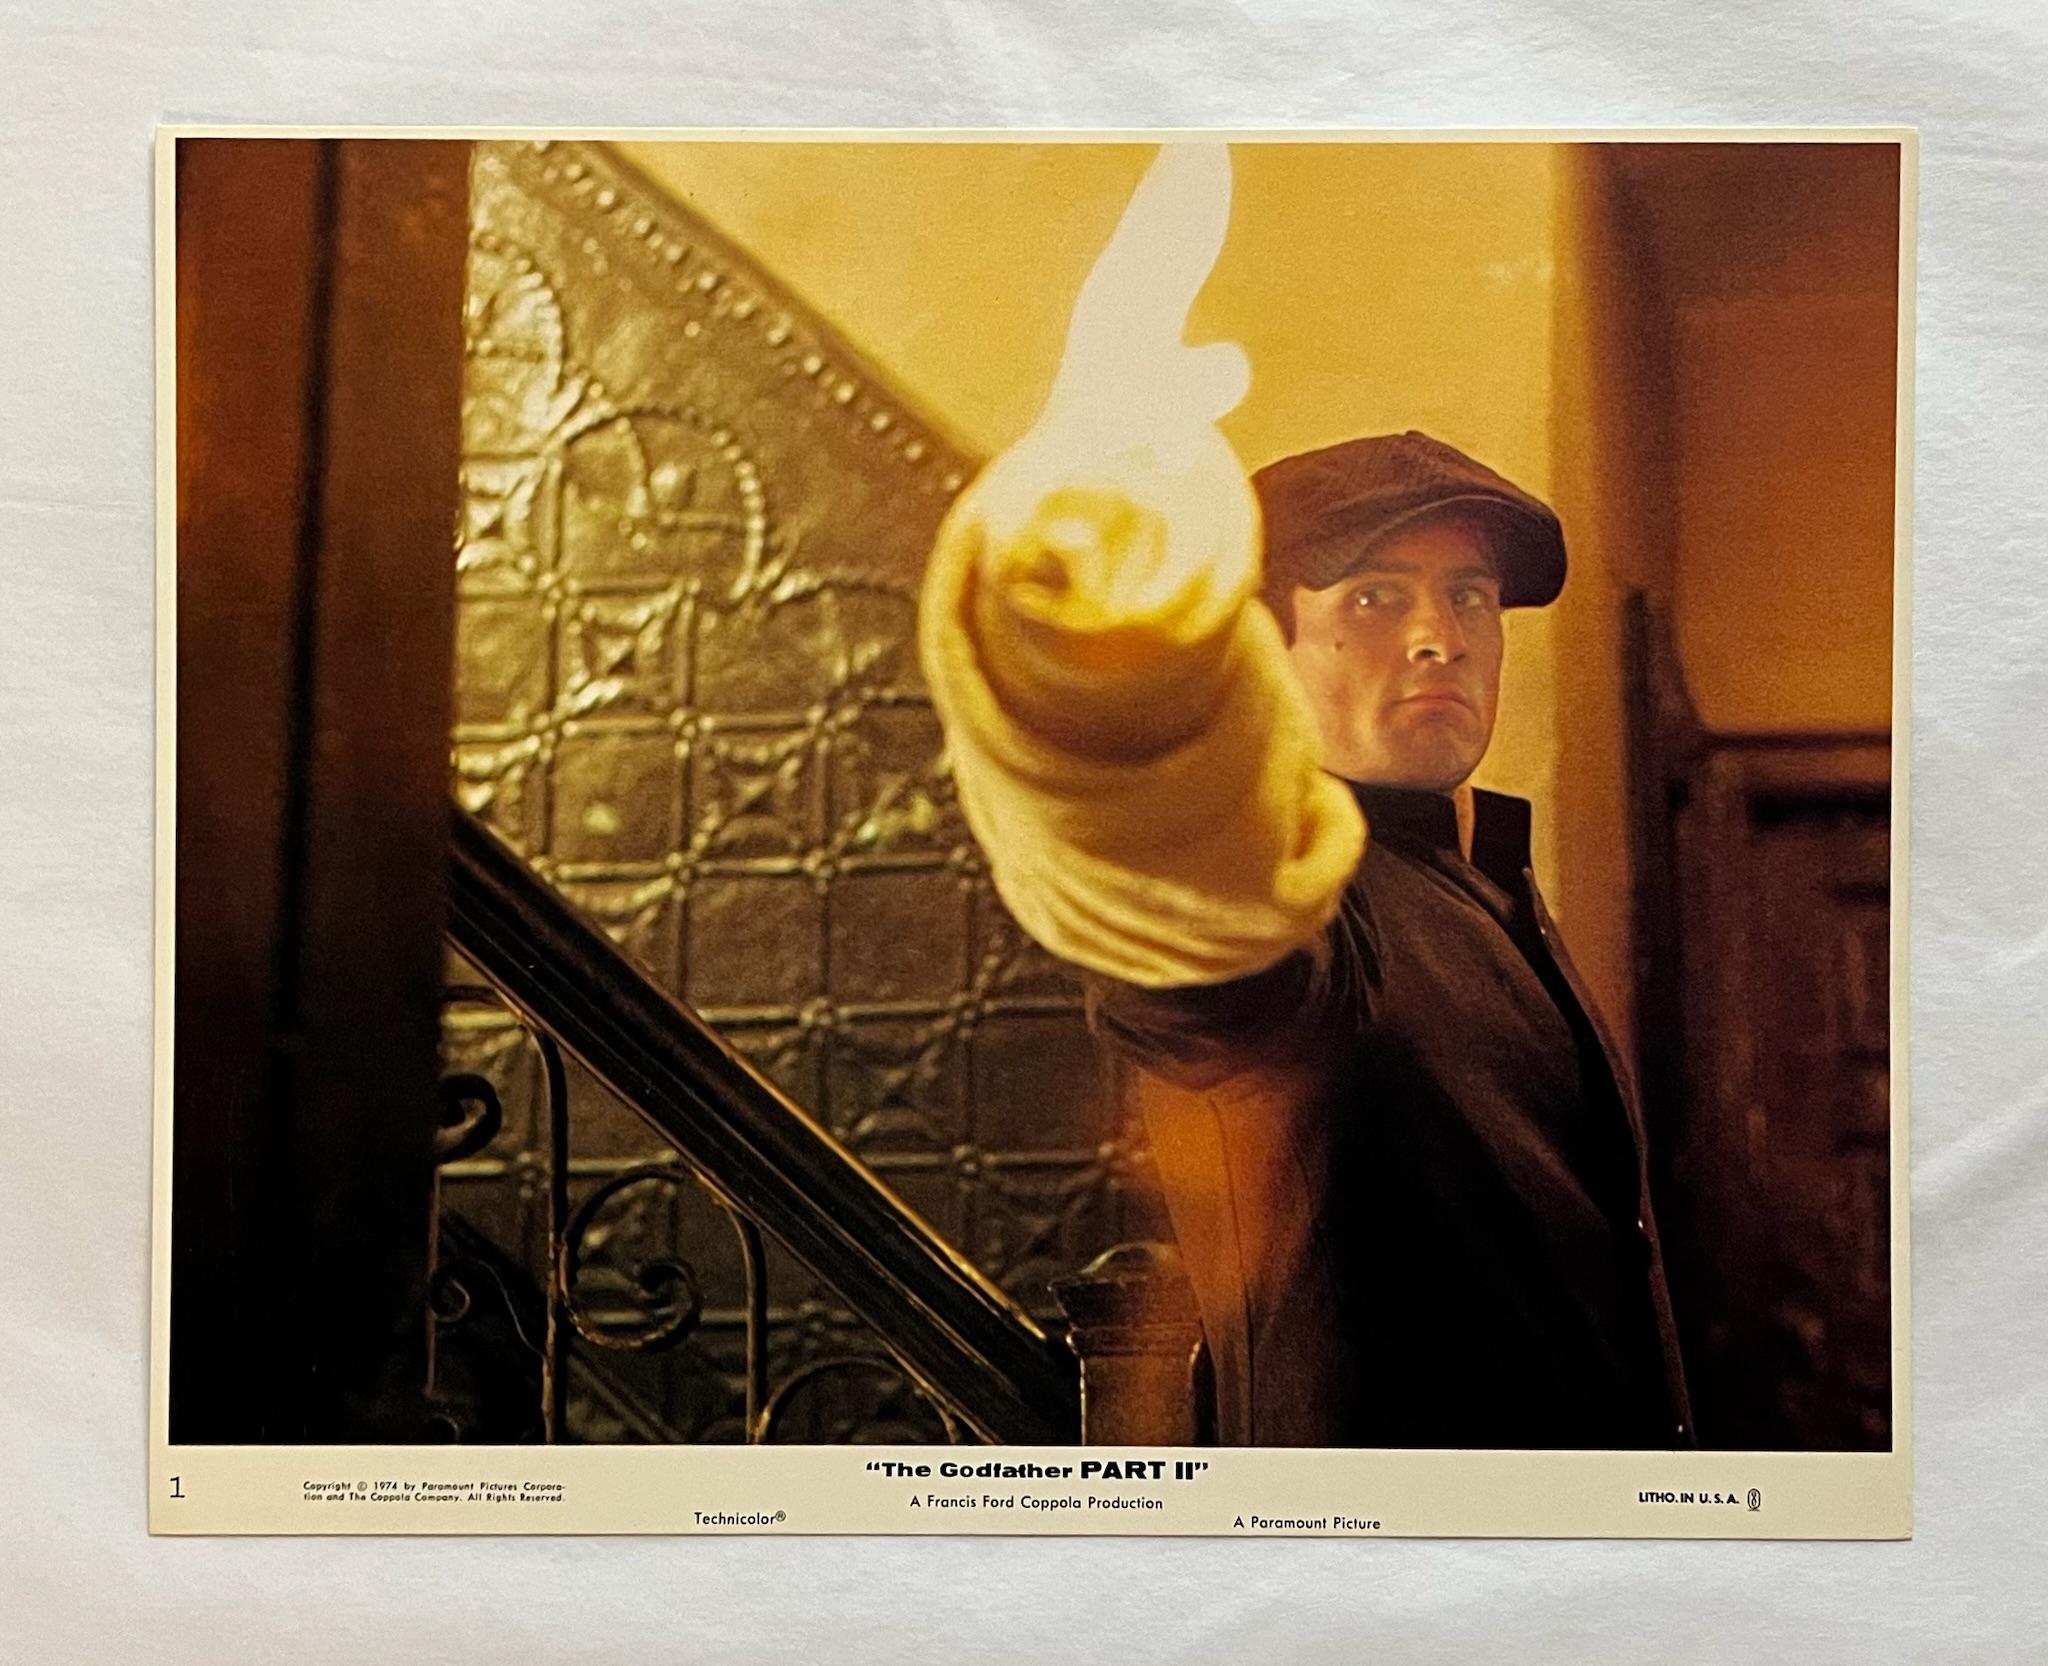 Robert De Niro in The Godfather Part II - Original 1974 Lobby Card #1 - Print by Unknown